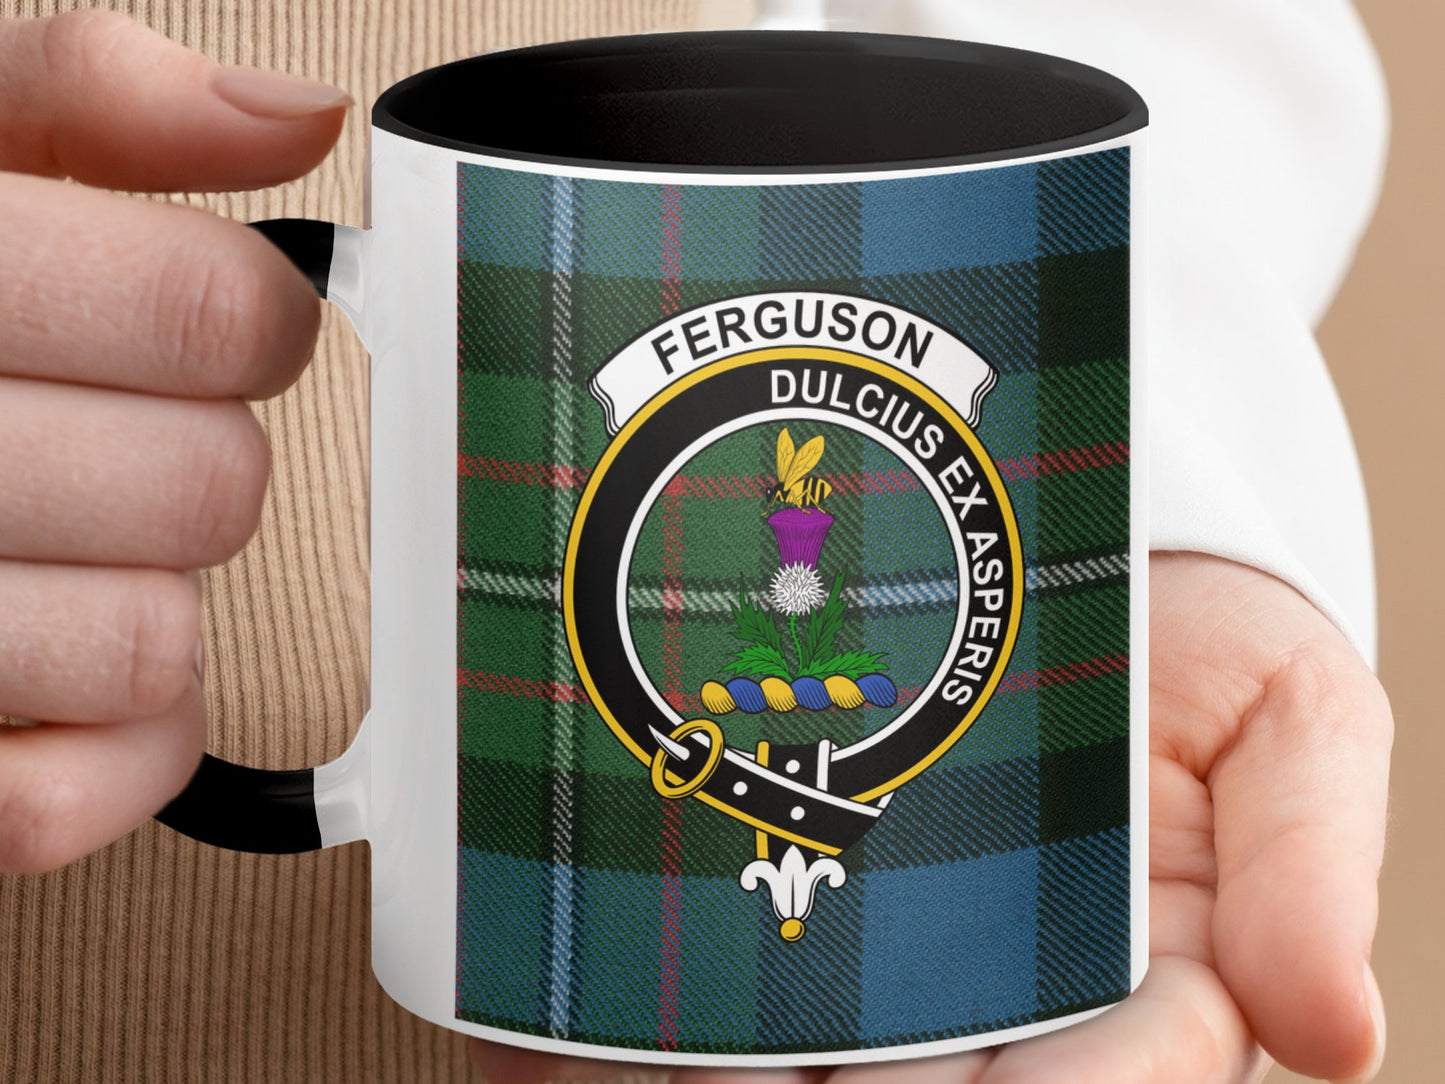 Clan Fergusson Scottish Tartan Crest Emblem Mug - Living Stone Gifts